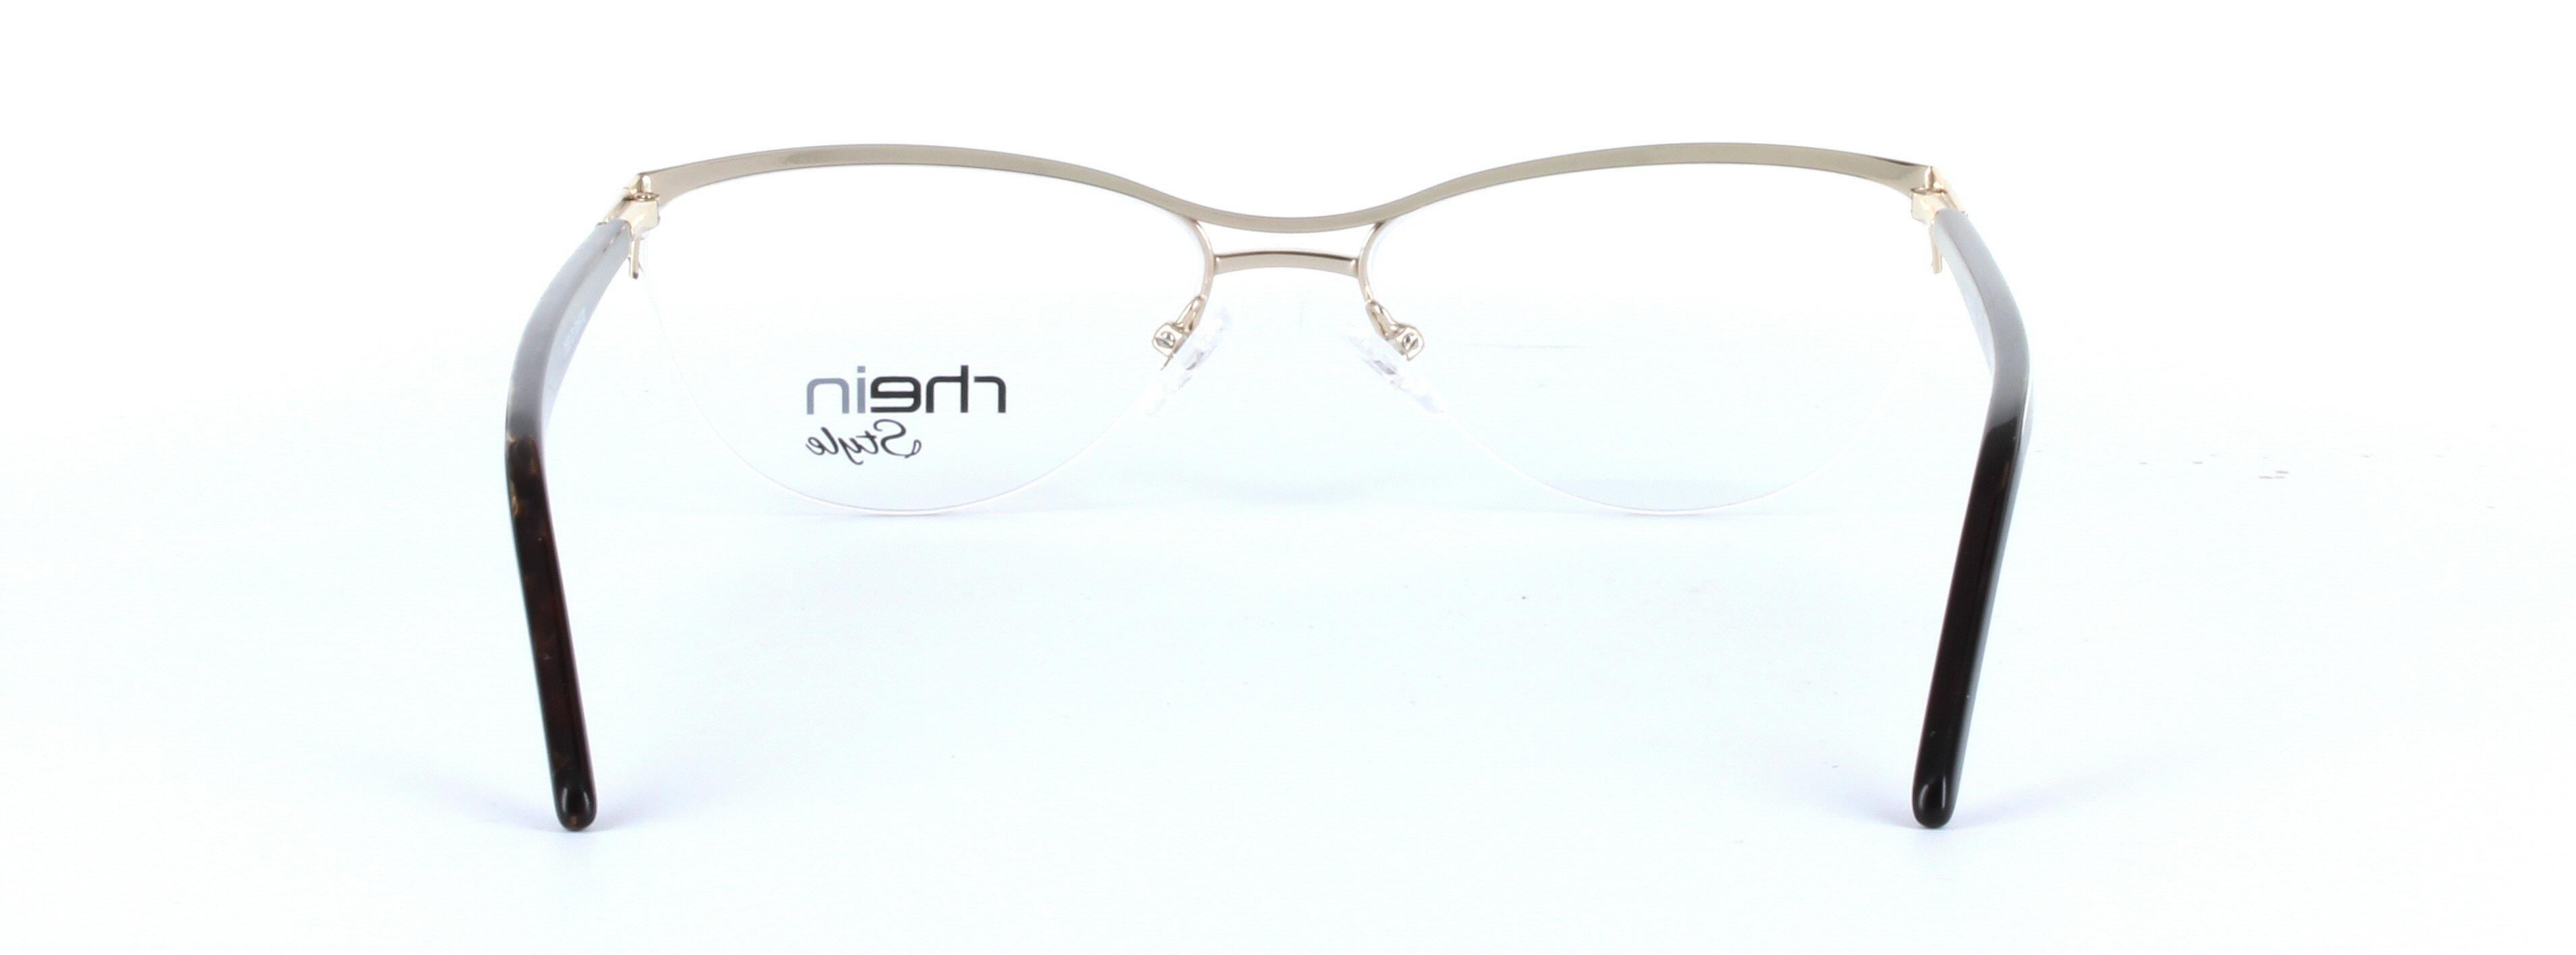 Agora Black Semi Rimless Oval Metal Glasses - Image View 3